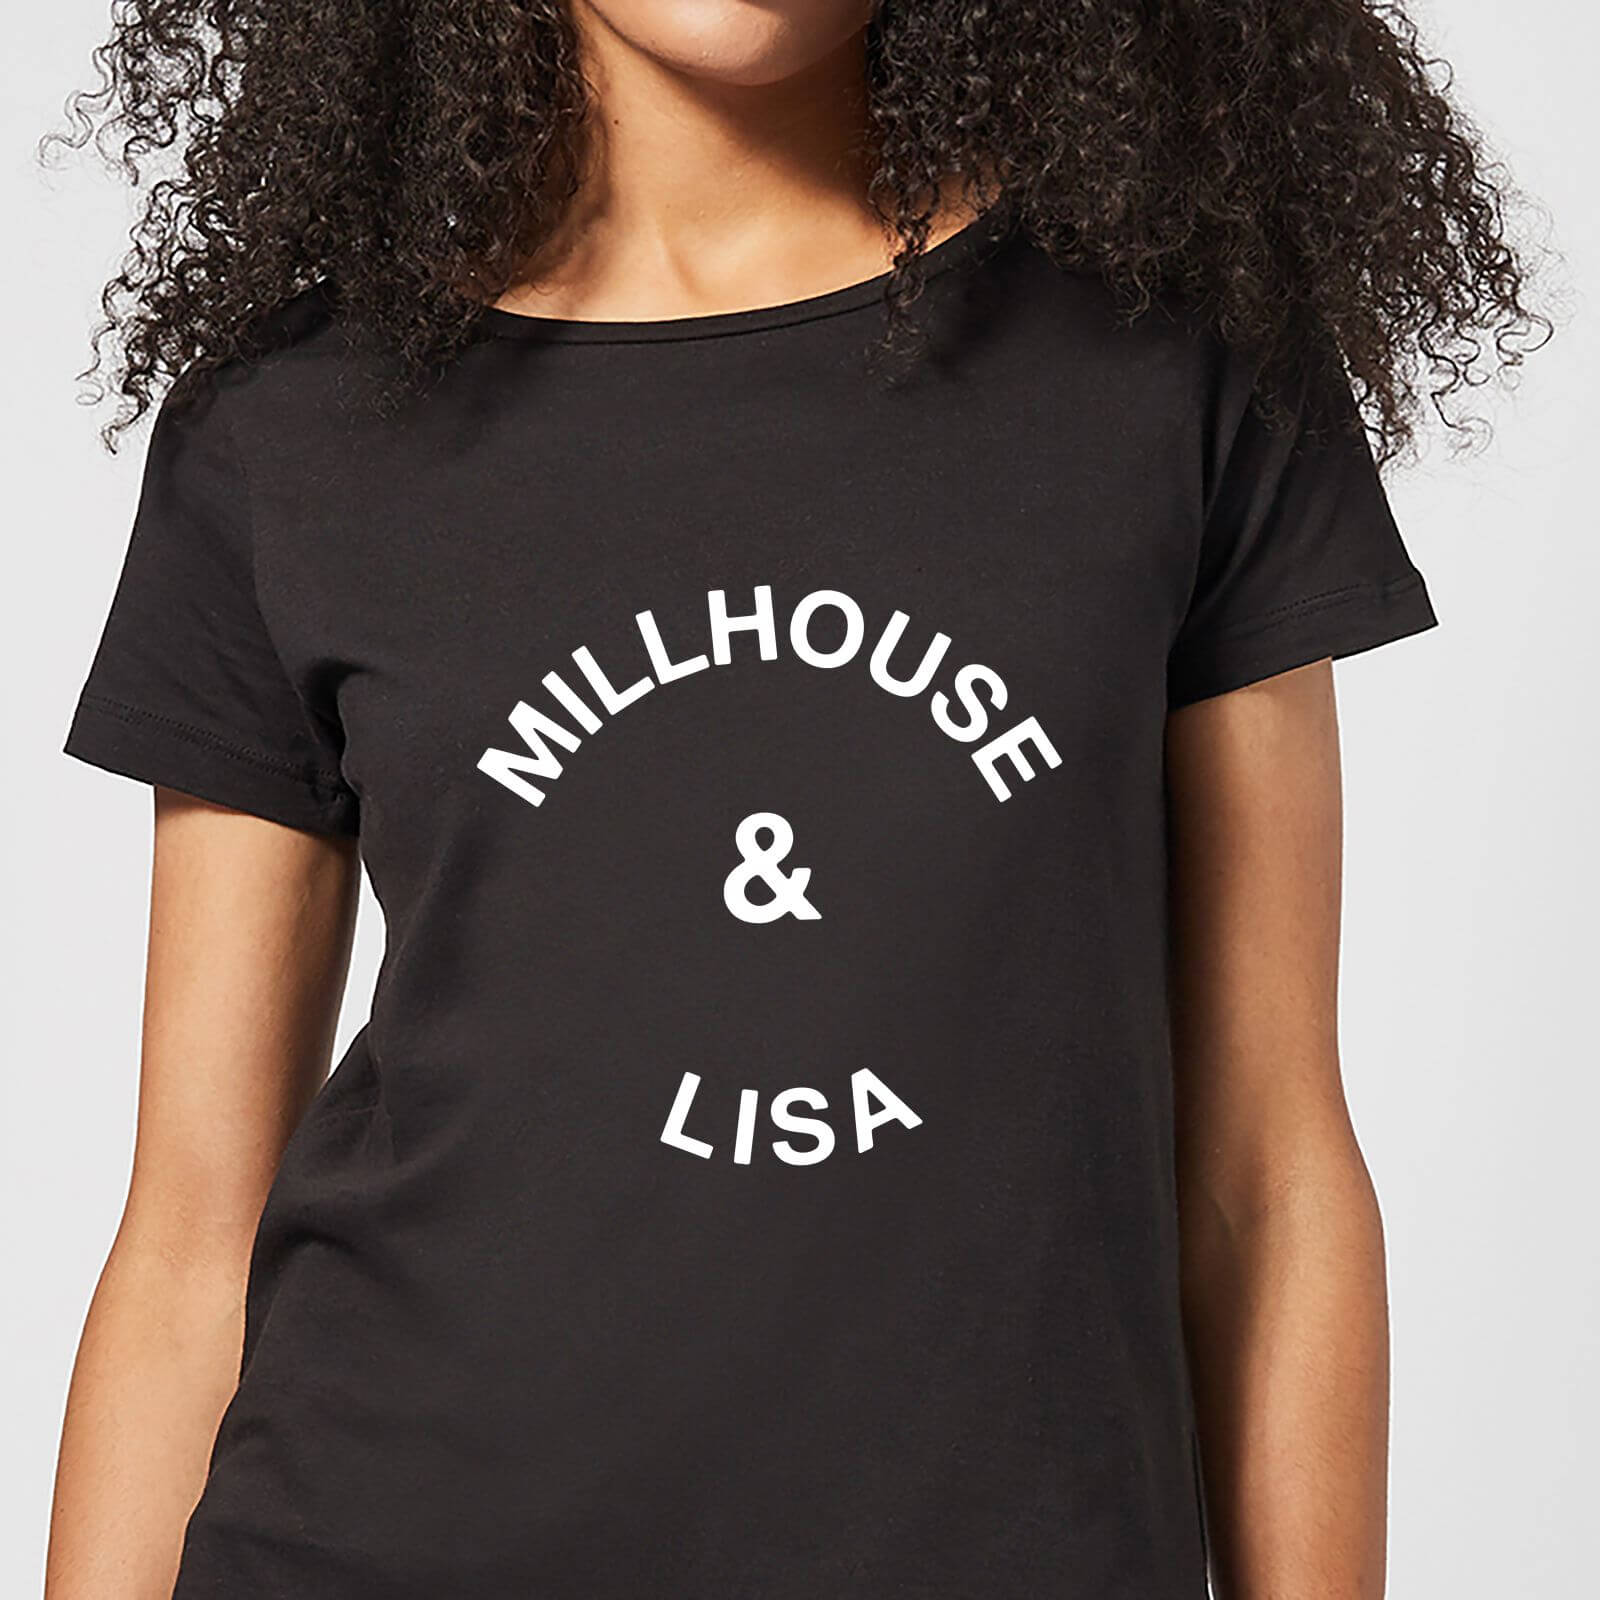 Millhouse & Lisa Women's T-Shirt - Black - L - Black